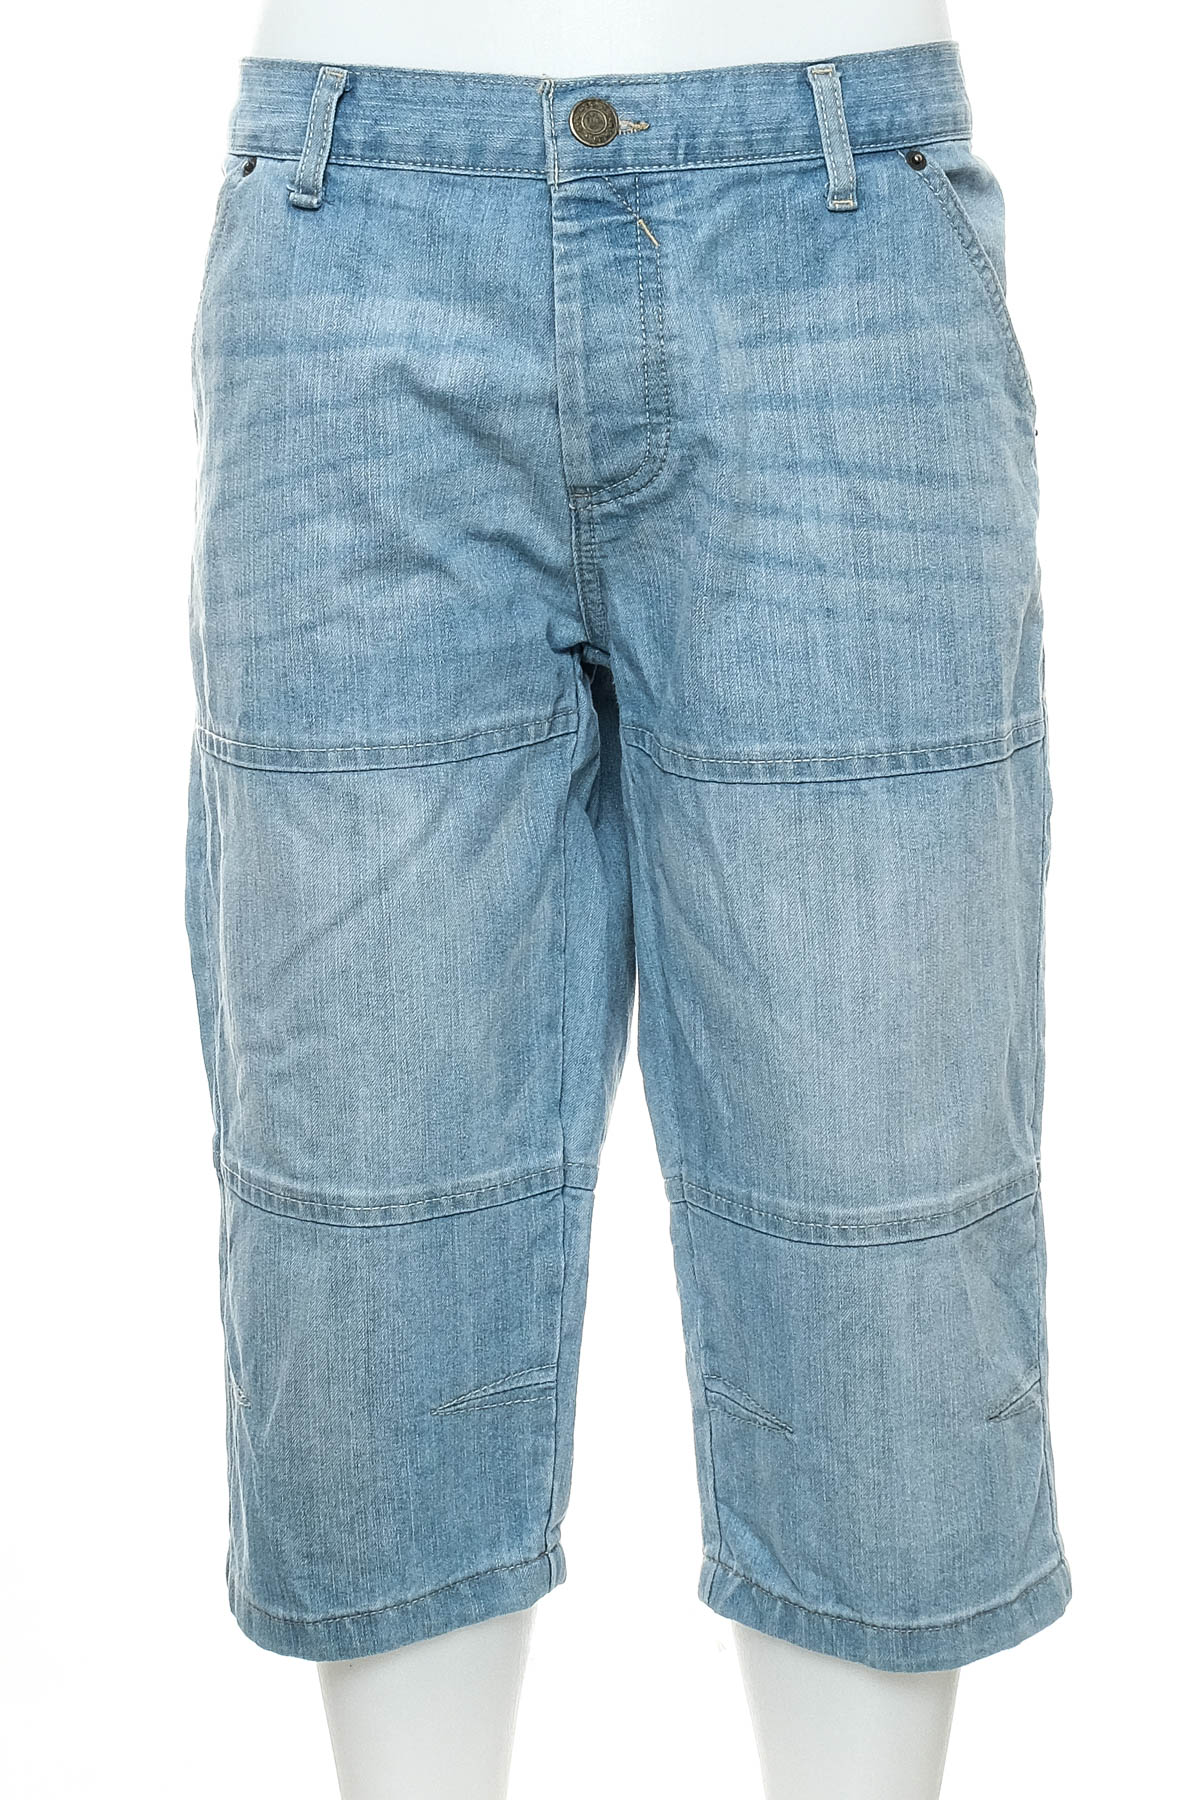 Pantaloni scurți bărbați - Denim Co - 0